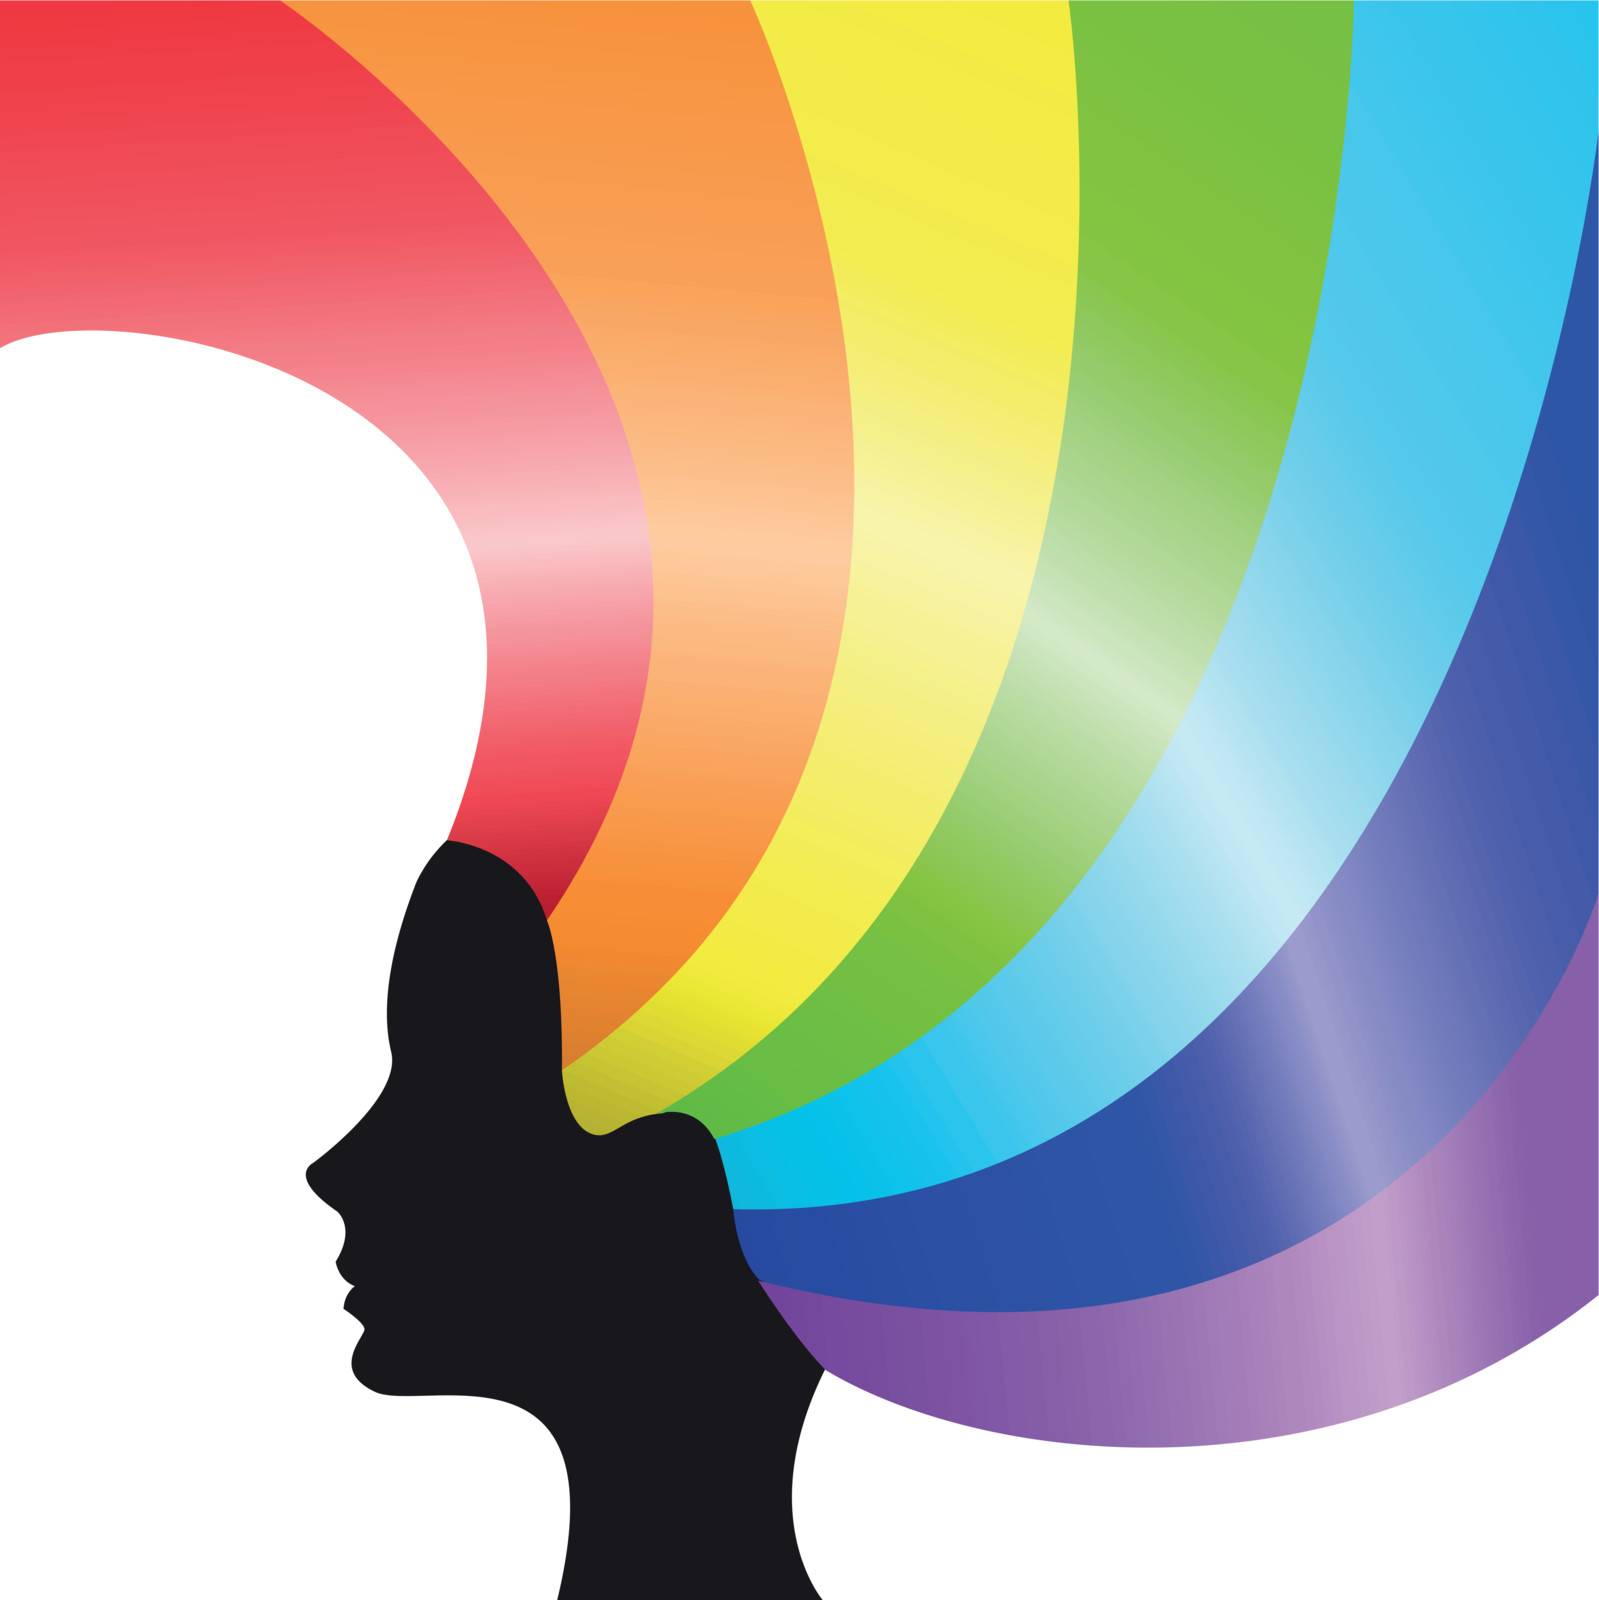 black silhouette of a female head with rainbow hair